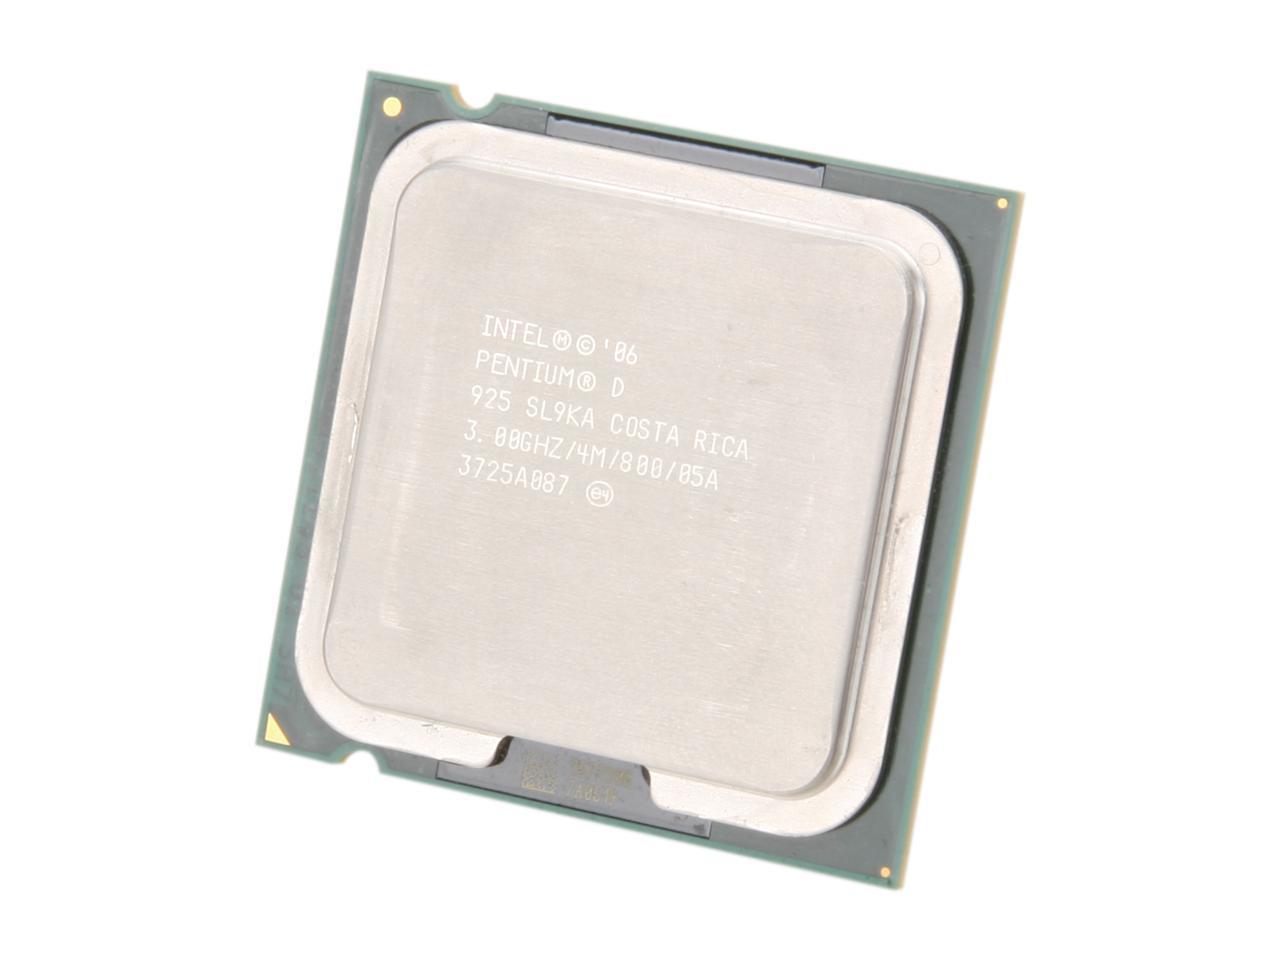 Интел 5500. Процессор Intel Pentium d 925. Intel Pentium e5300. Процессор Intel Core 2 Duo e7500 Wolfdale. Пентиум е5300.